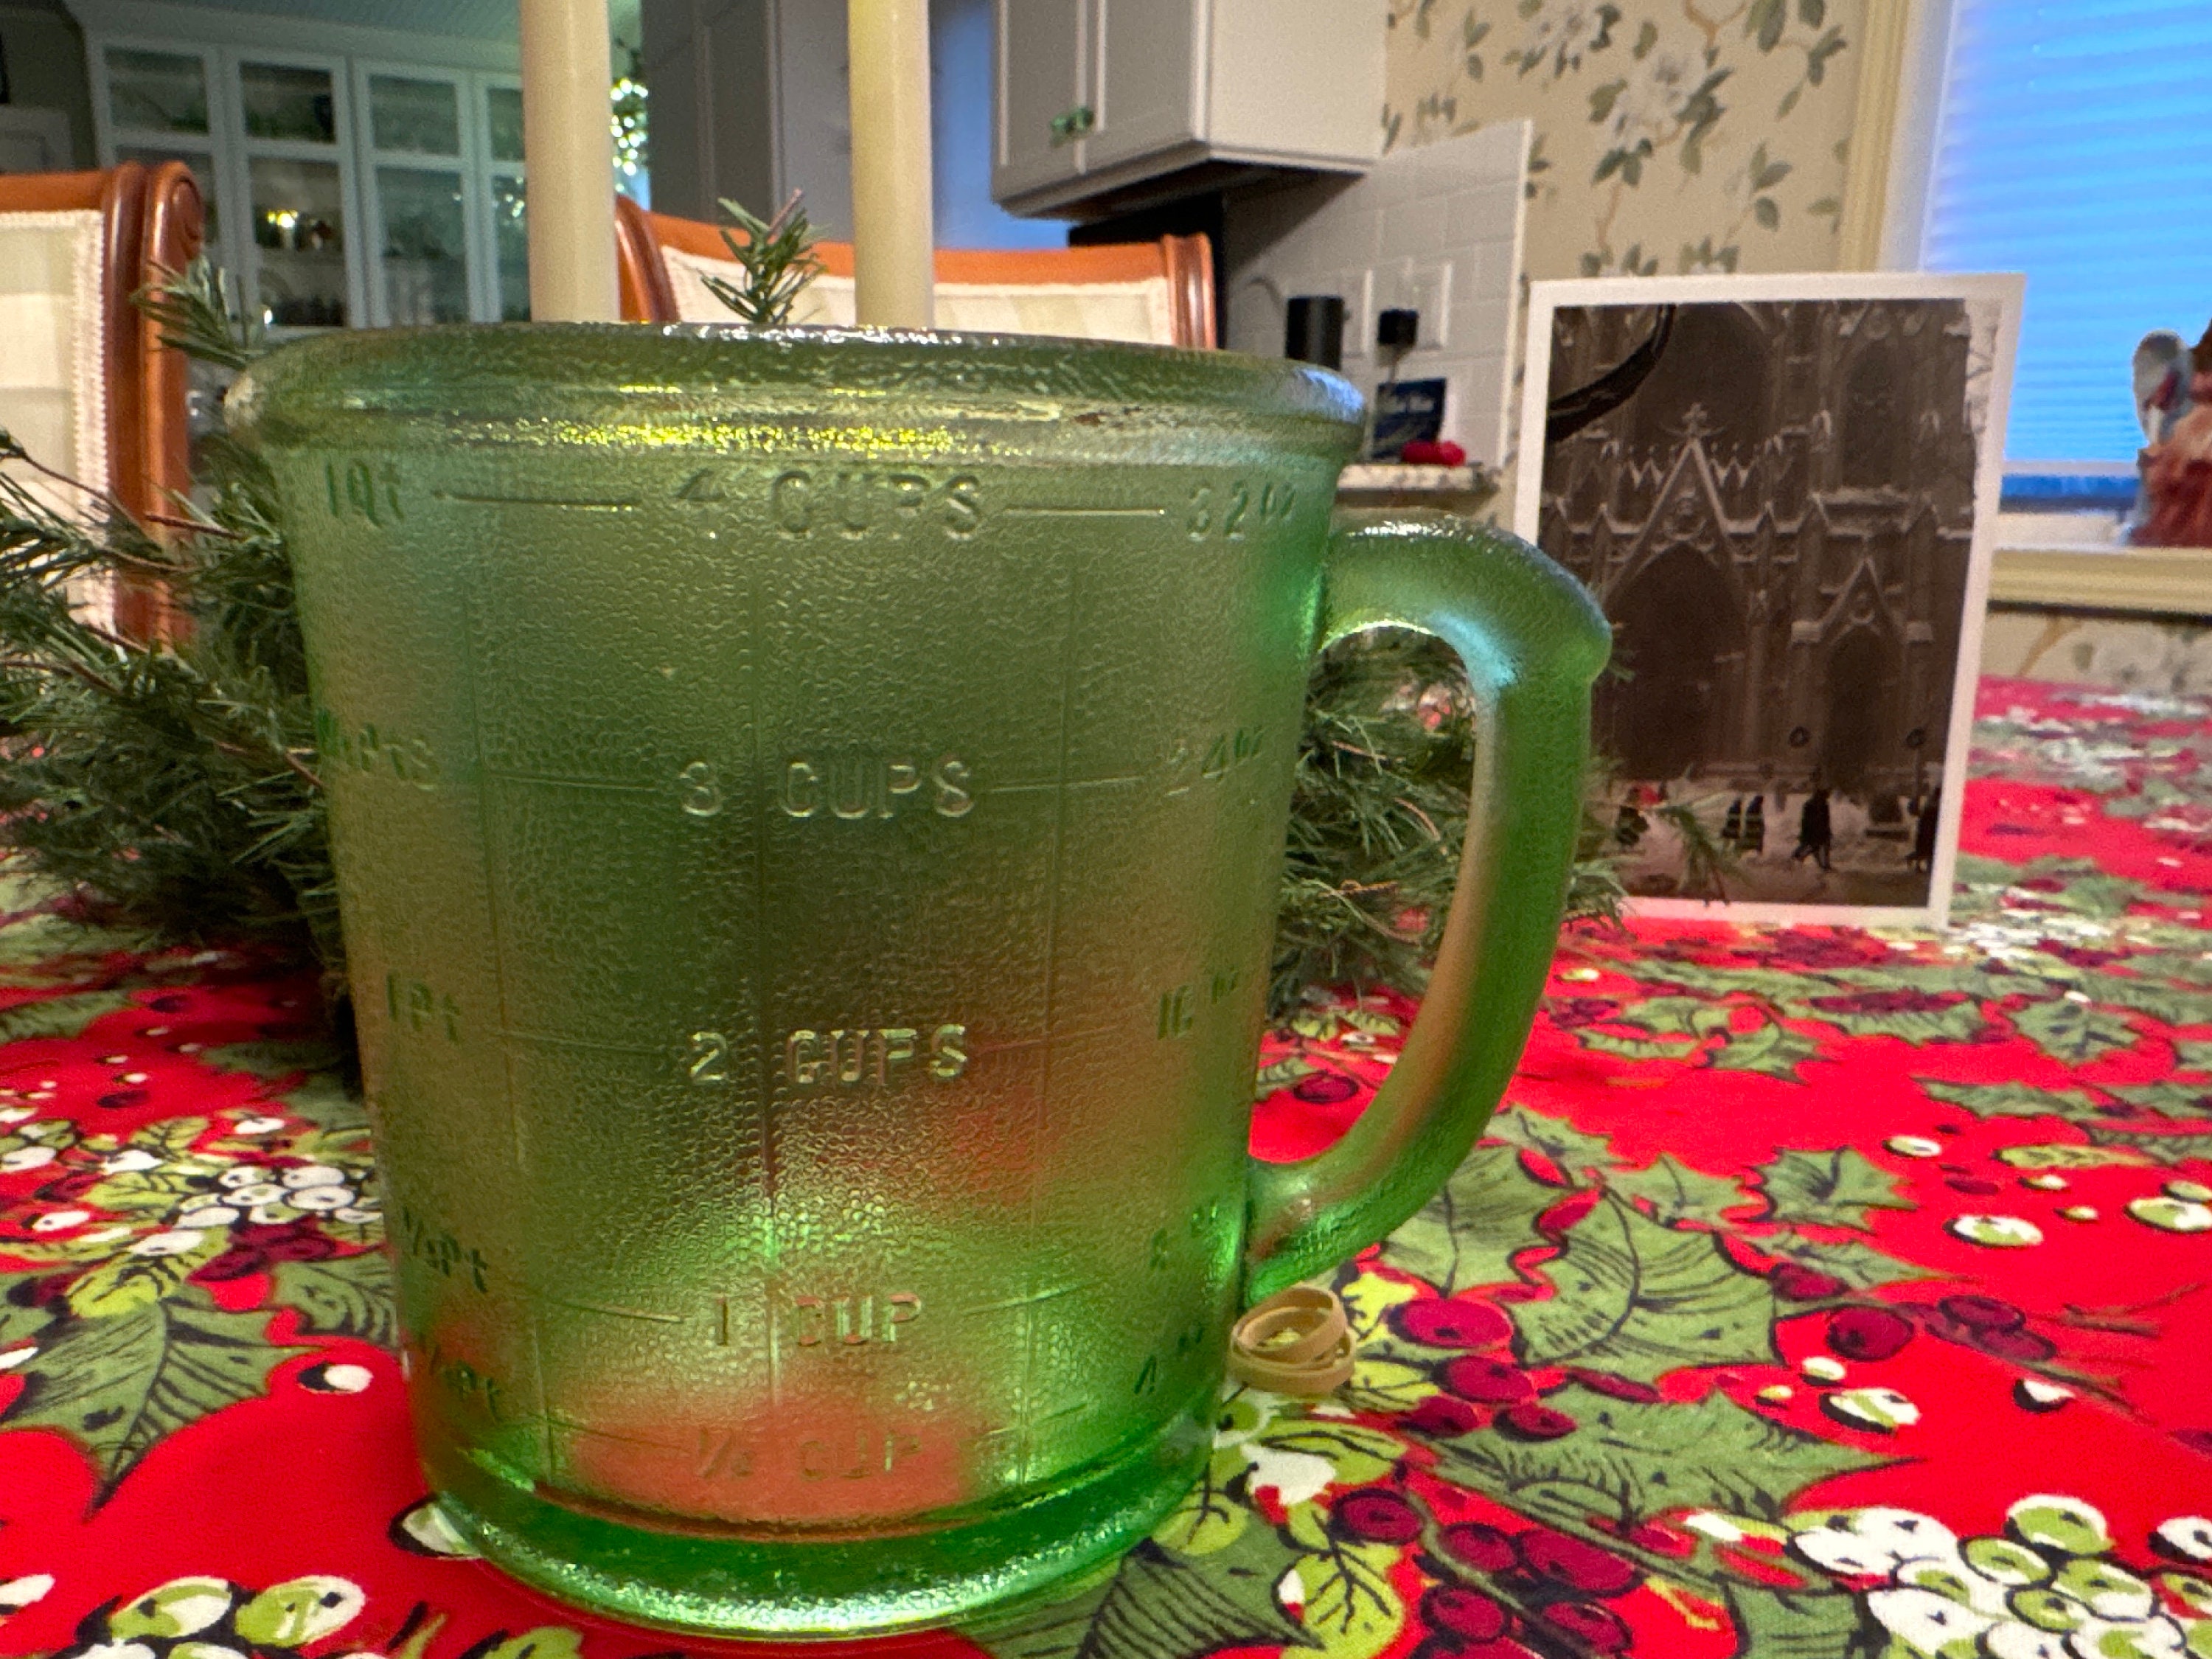 Vintage Hazel Atlas 1 Cup Glass Measuring Cup Embossed Clear Straight Side